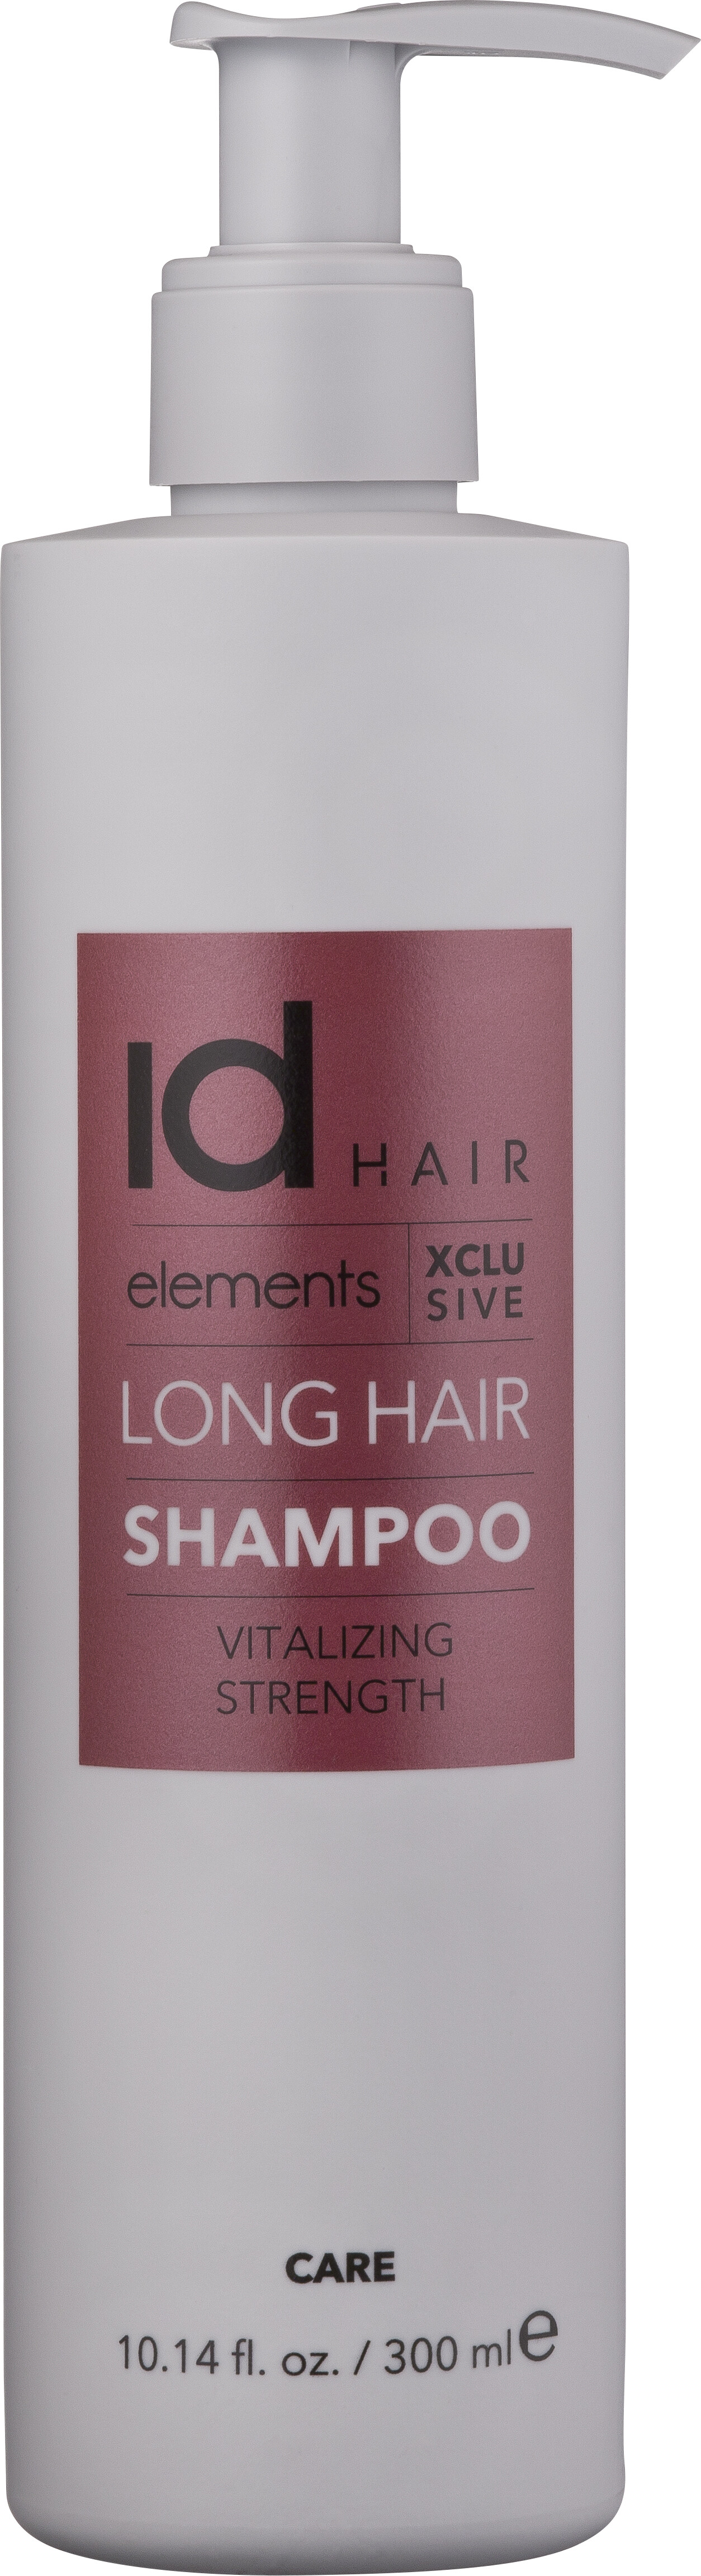 Billede af Id Hair - Elements Xclusive Long Hair Shampoo 300 Ml hos Gucca.dk